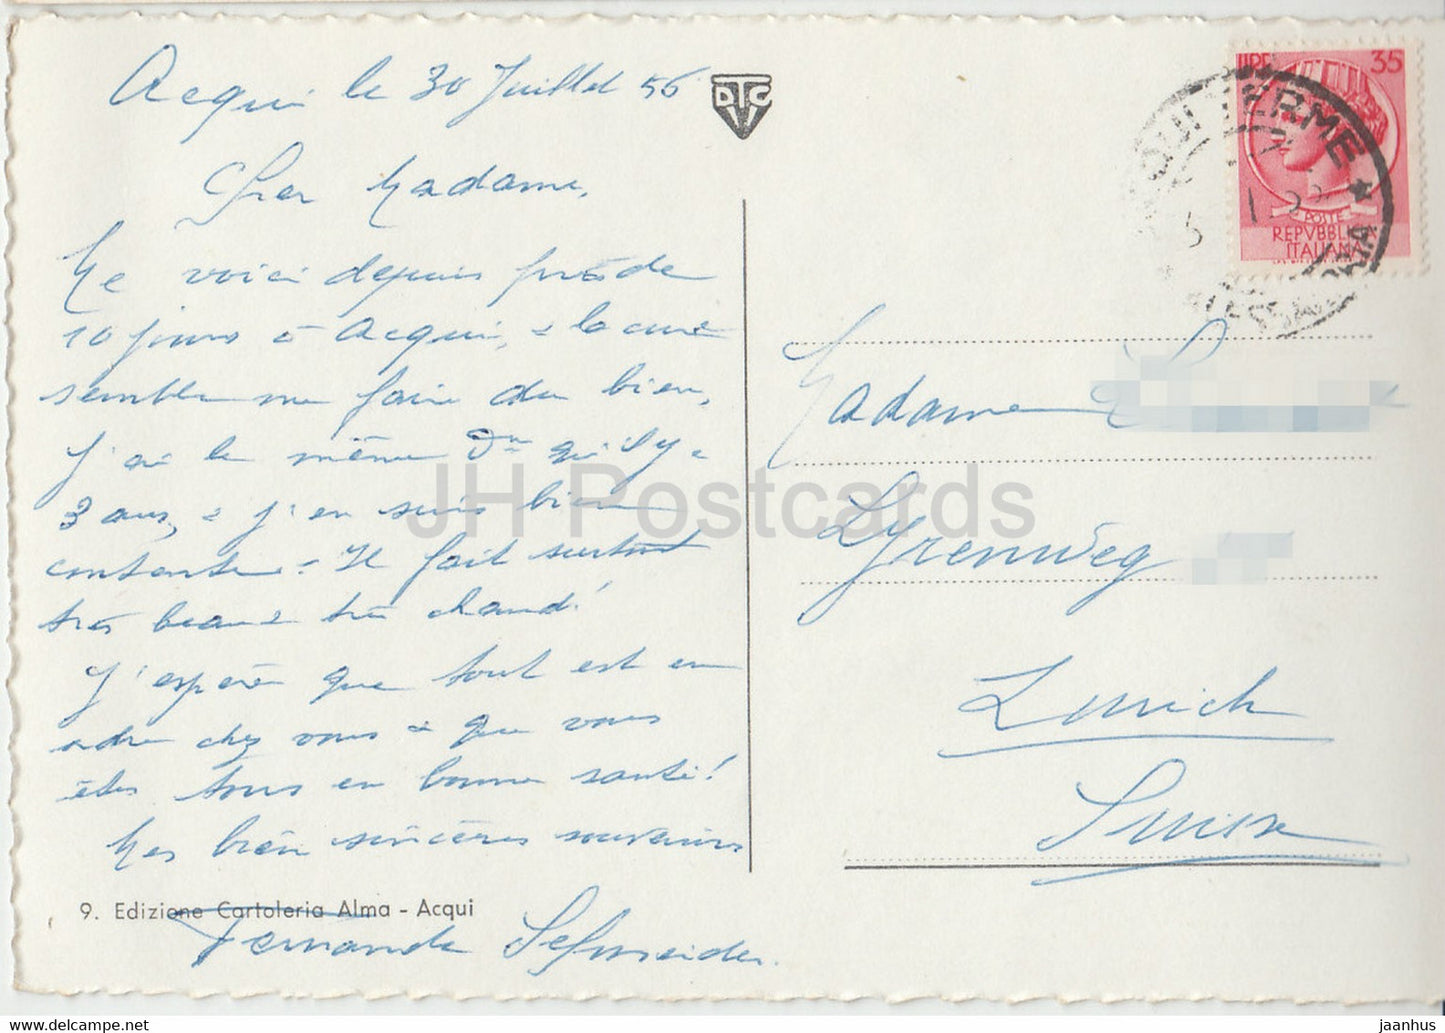 Acqui Terme - Via Giulio Monteverde - carte postale ancienne - 1956 - Italie - utilisé